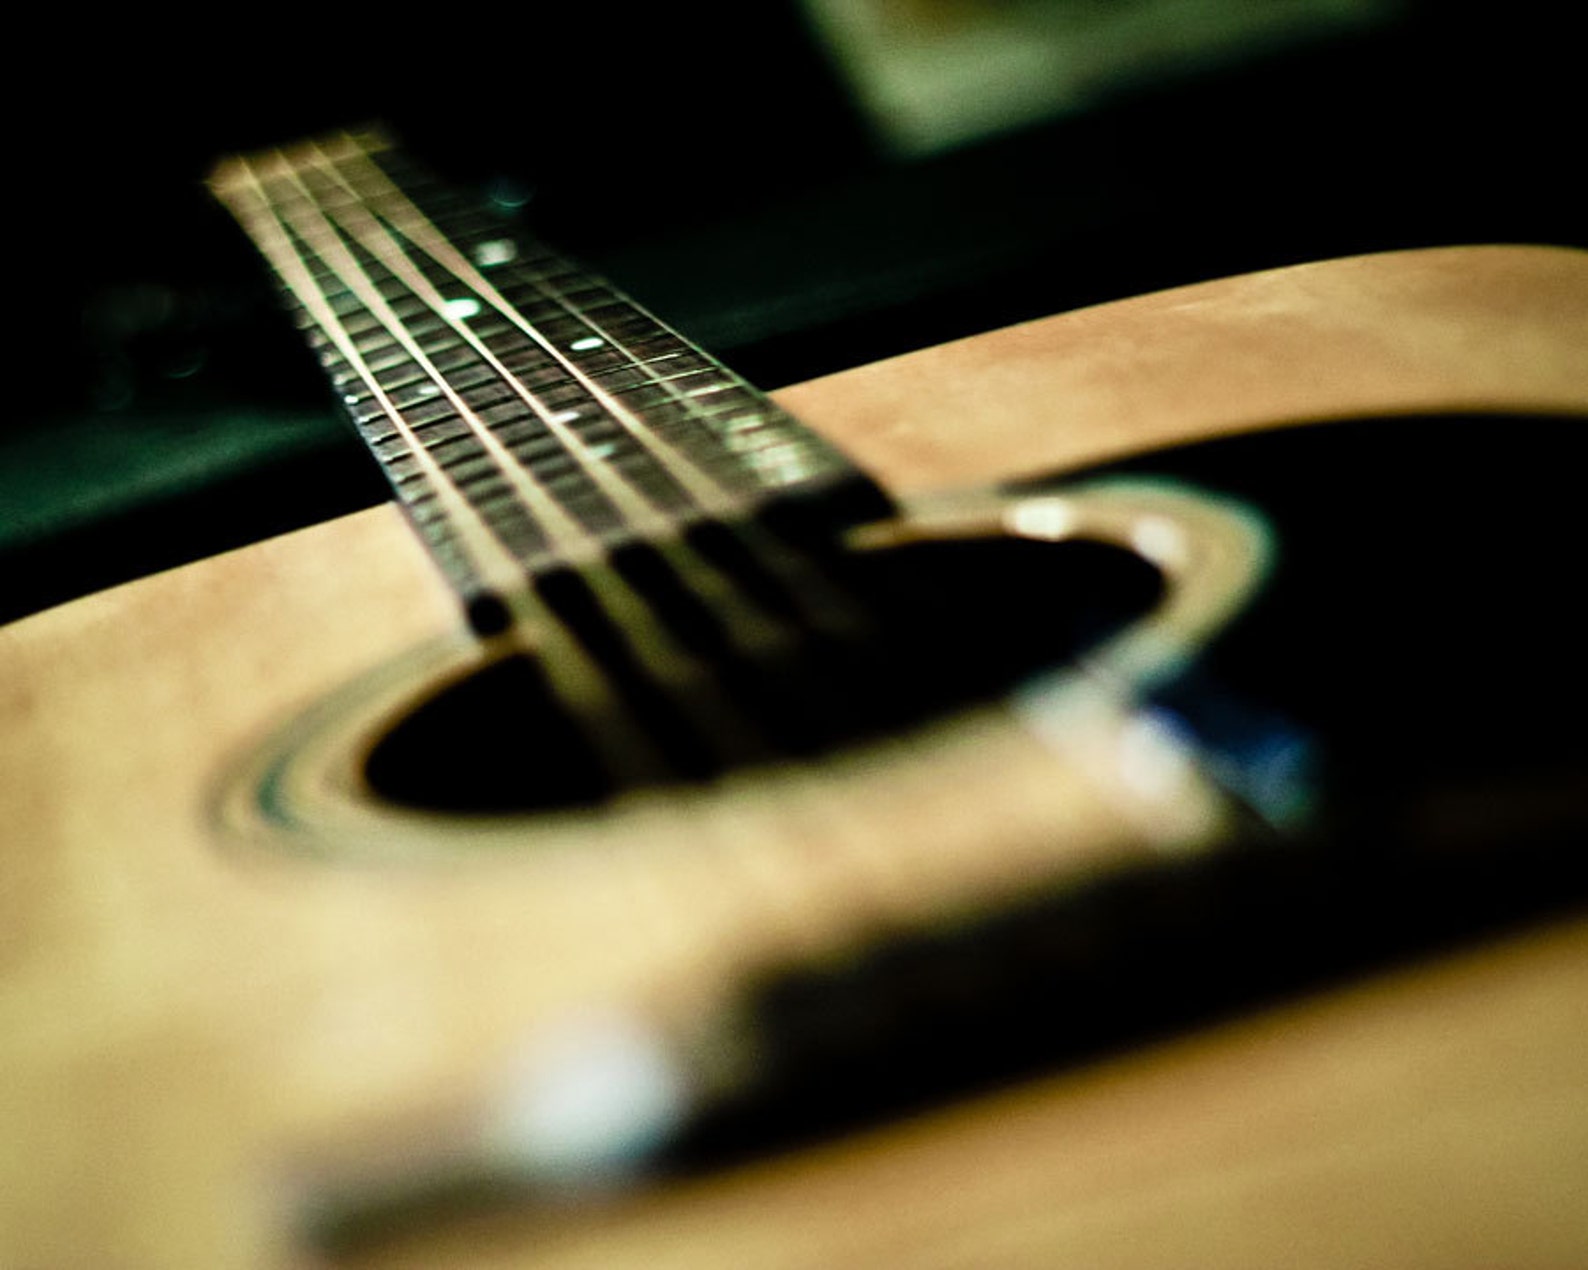 Martin & Co. Guitar Angle Depth of Field Photo | Etsy